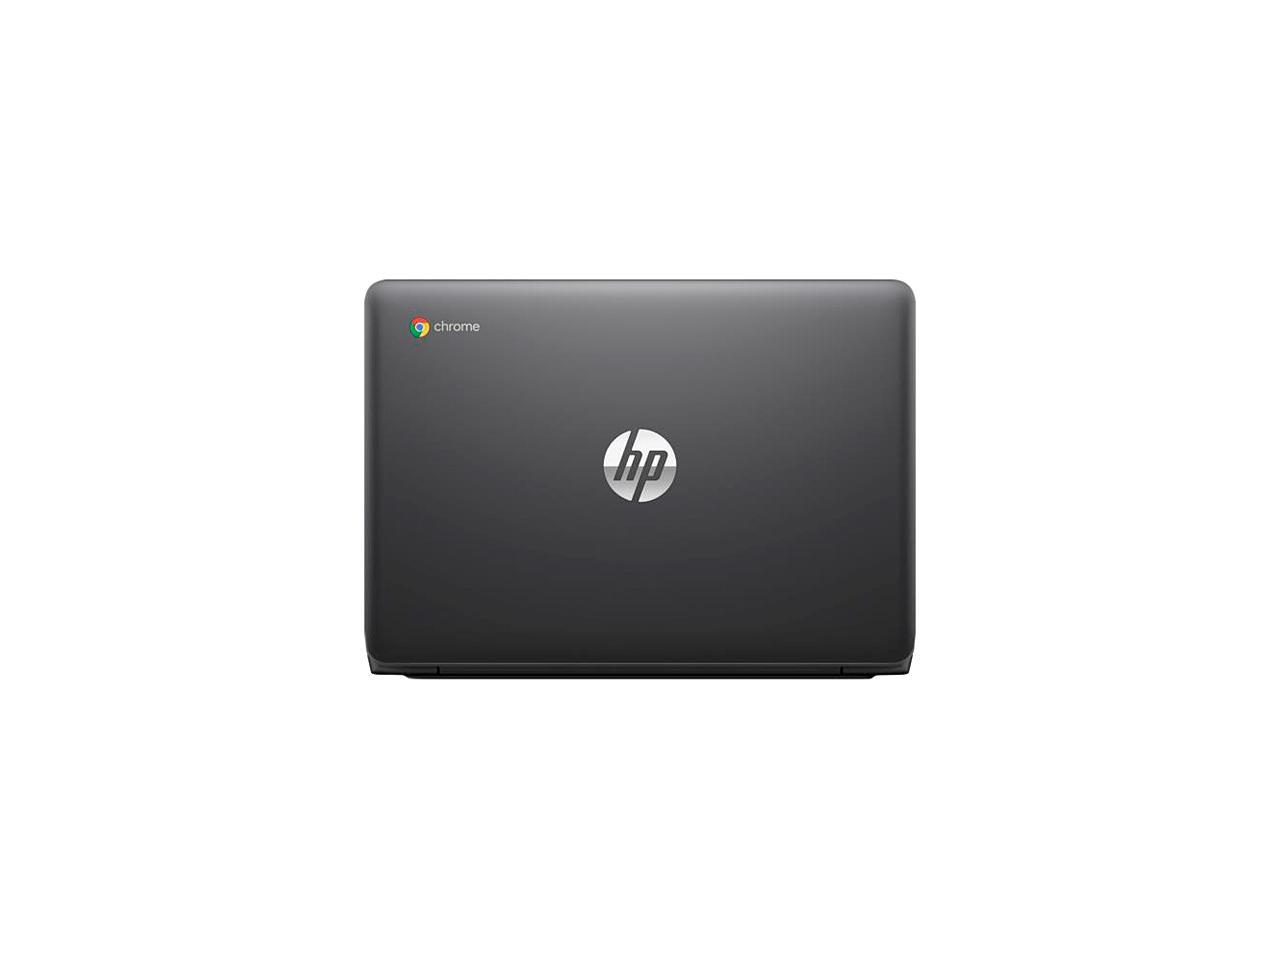 HP 11-v010nr Chromebook Intel Celeron N3060 (1.60 GHz) 4 GB Memory 16 GB eMMC Intel HD Graphics 400 11.6" 1366 x 768 Chrome OS